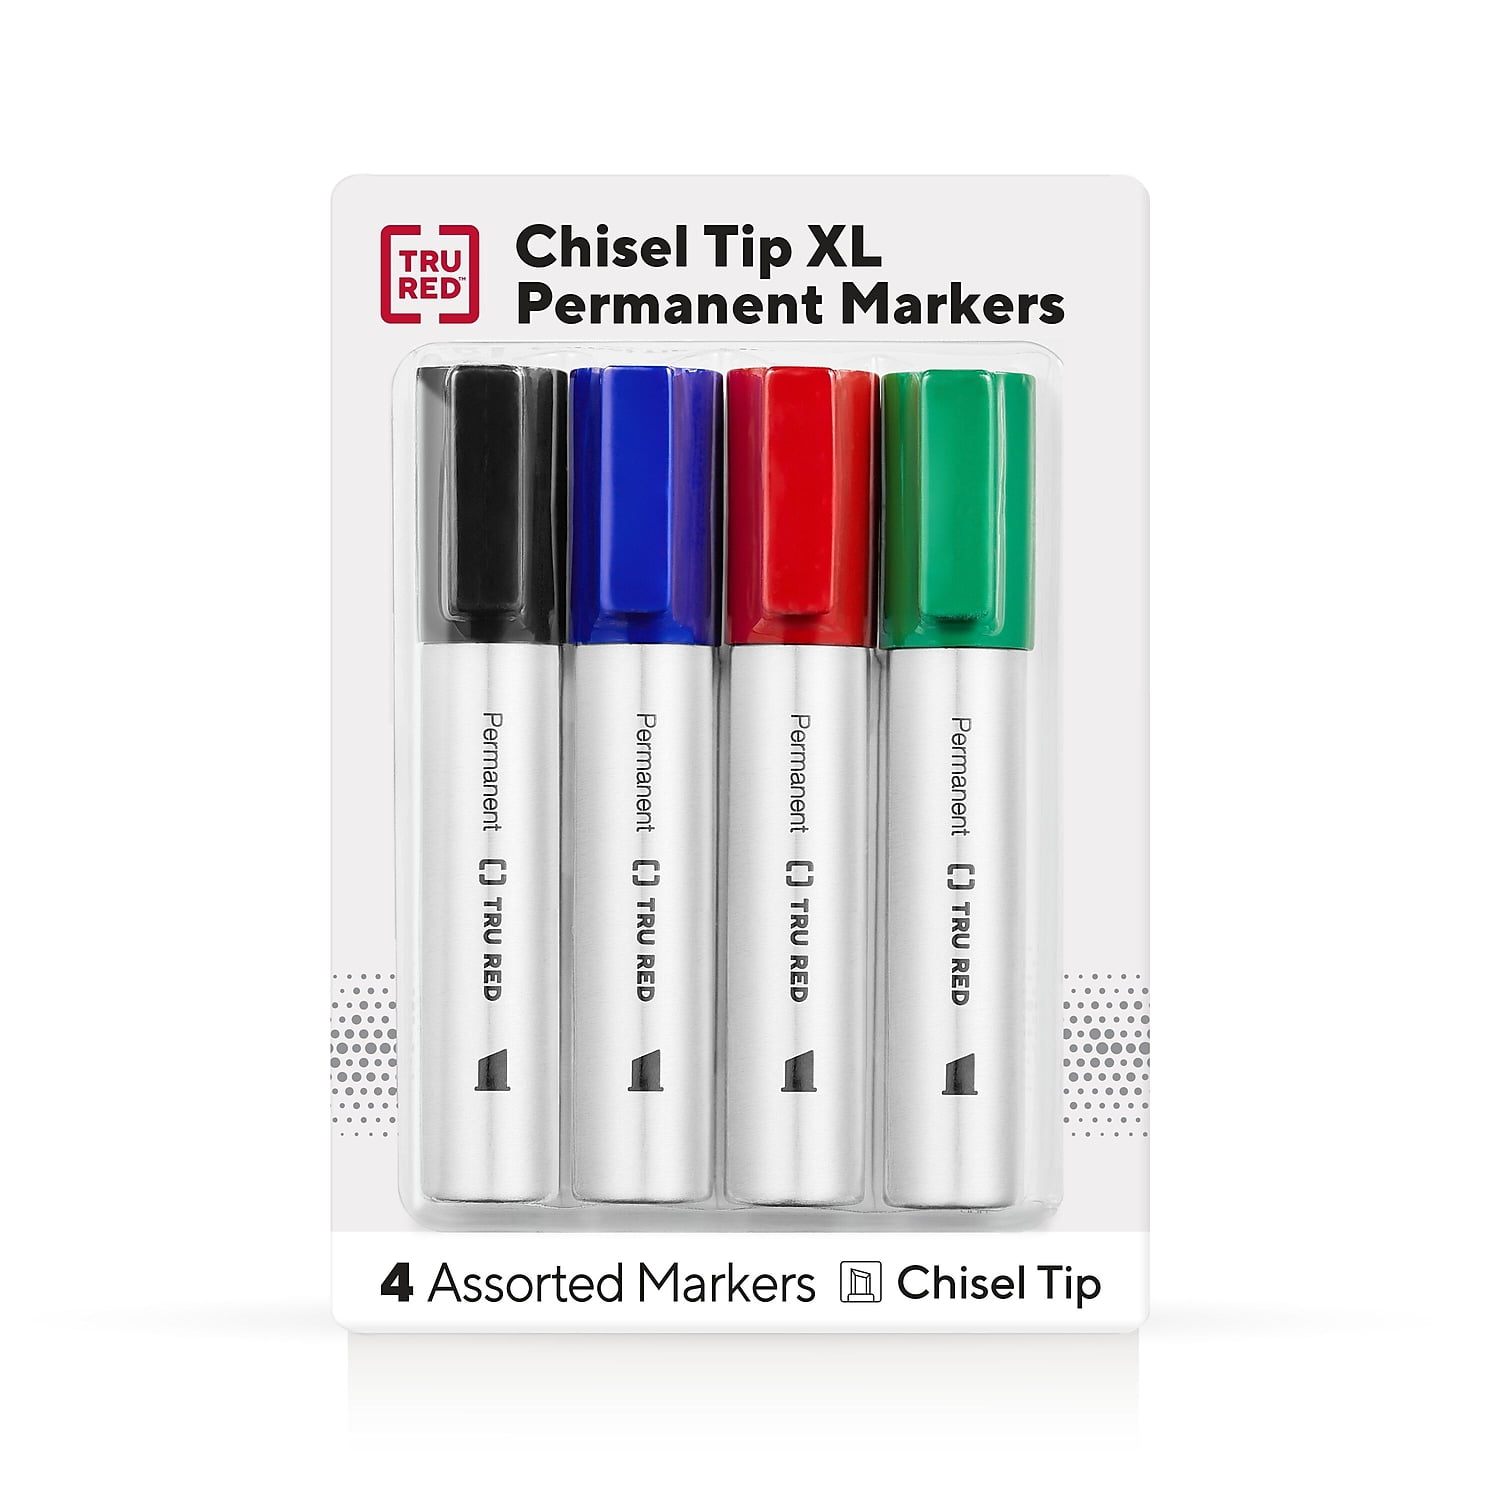  TRUTR56234CA  TRU RED Permanent Markers - Ultra Fine Tip -  Assorted - 5 Pack